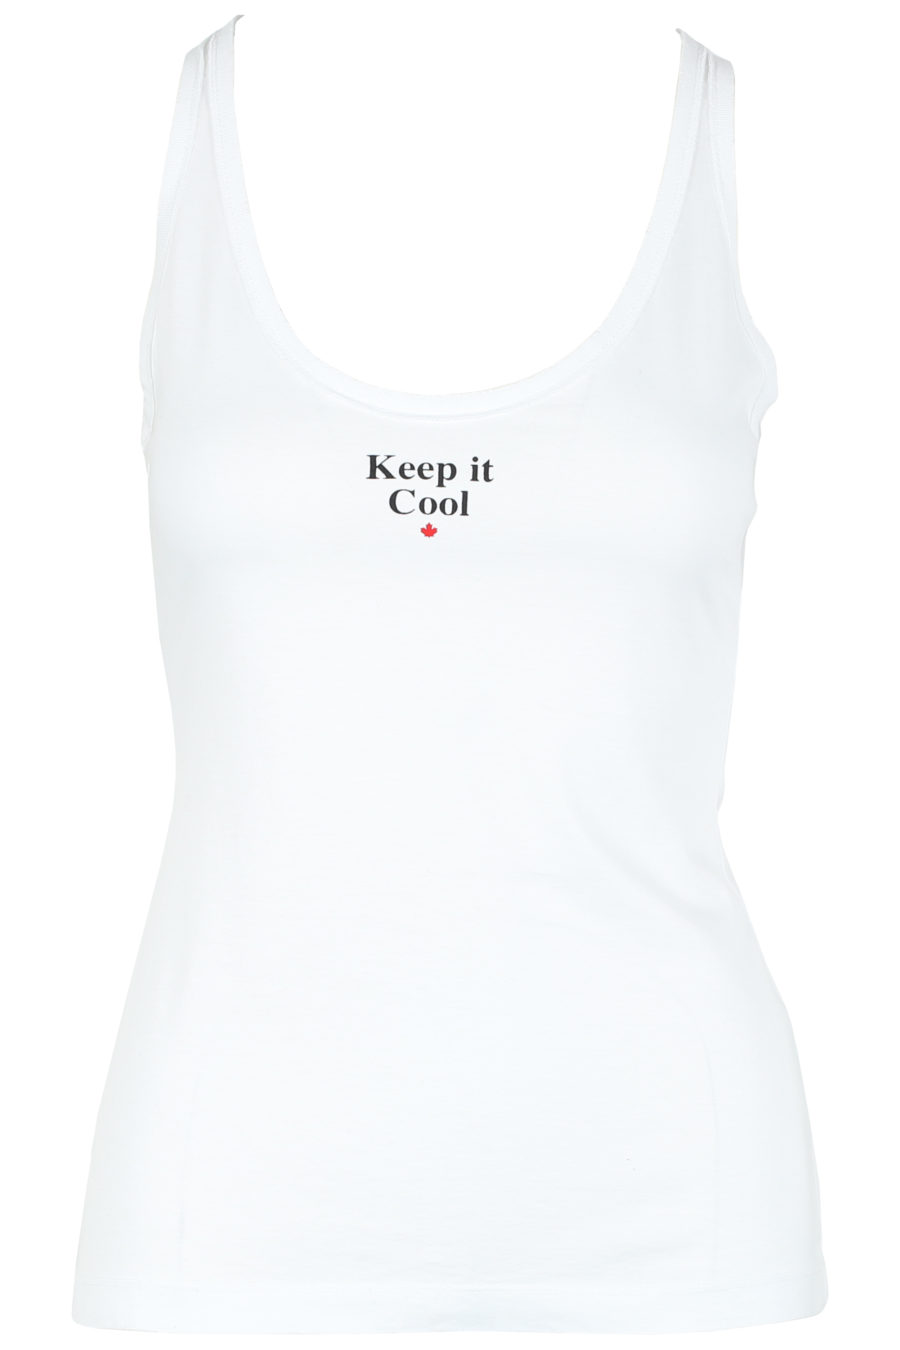 Camiseta de tirantes blanca "Keep it cool" - IMG 6243